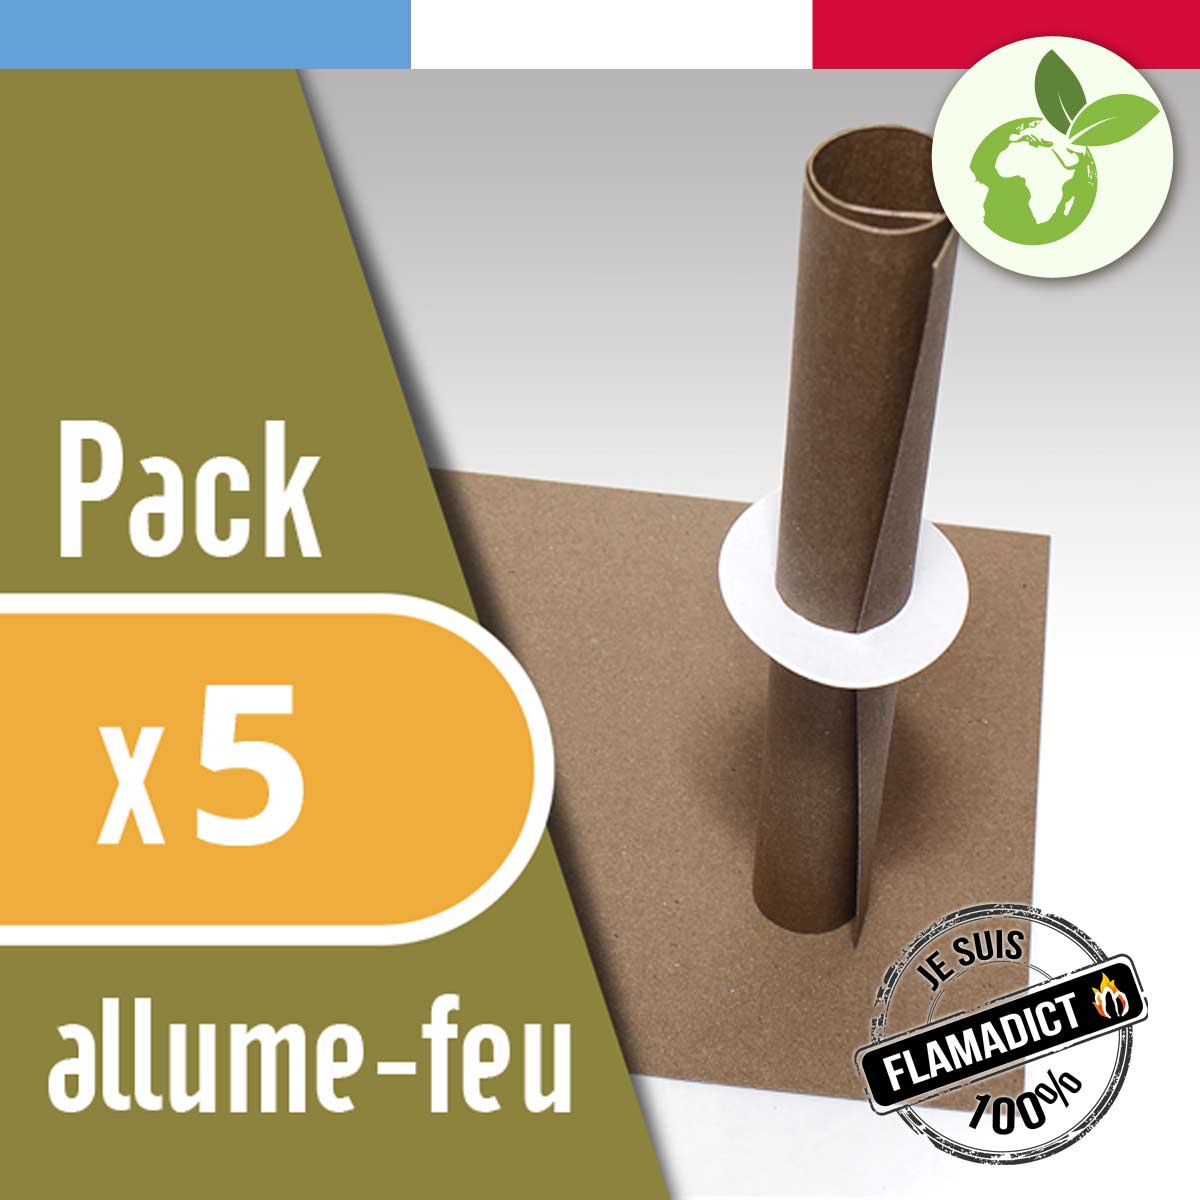 FlaMagic - Allume-feu - Pack de 5 - FlaMagic ®